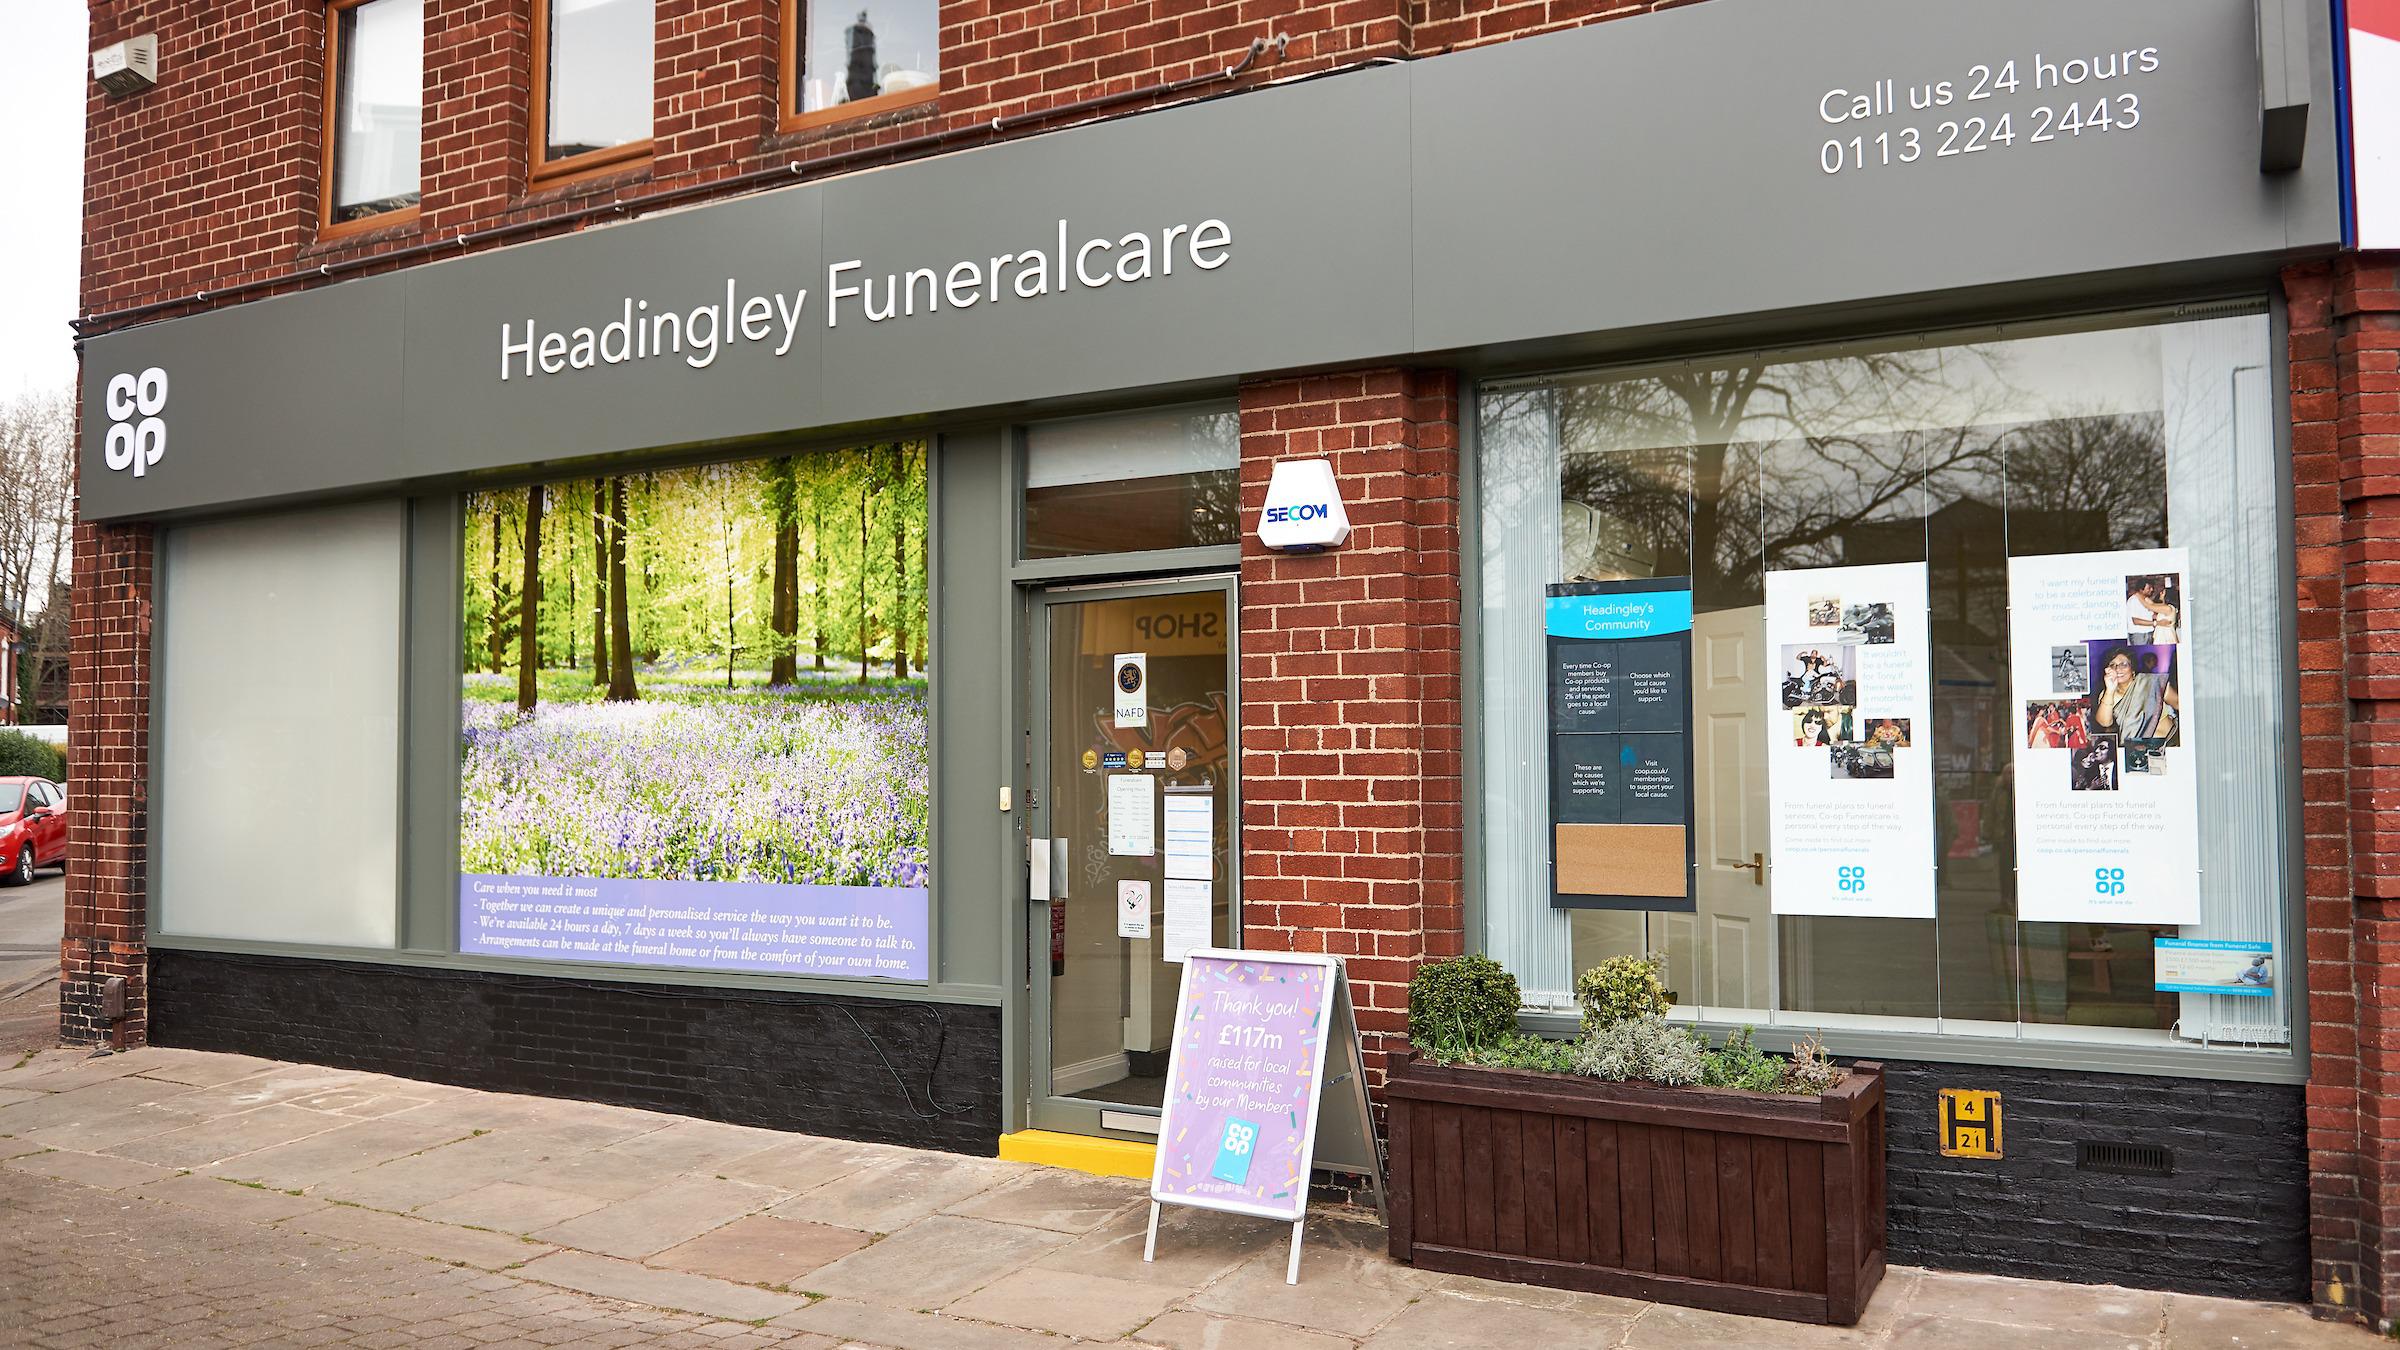 Images Co-op Funeralcare, Headingley